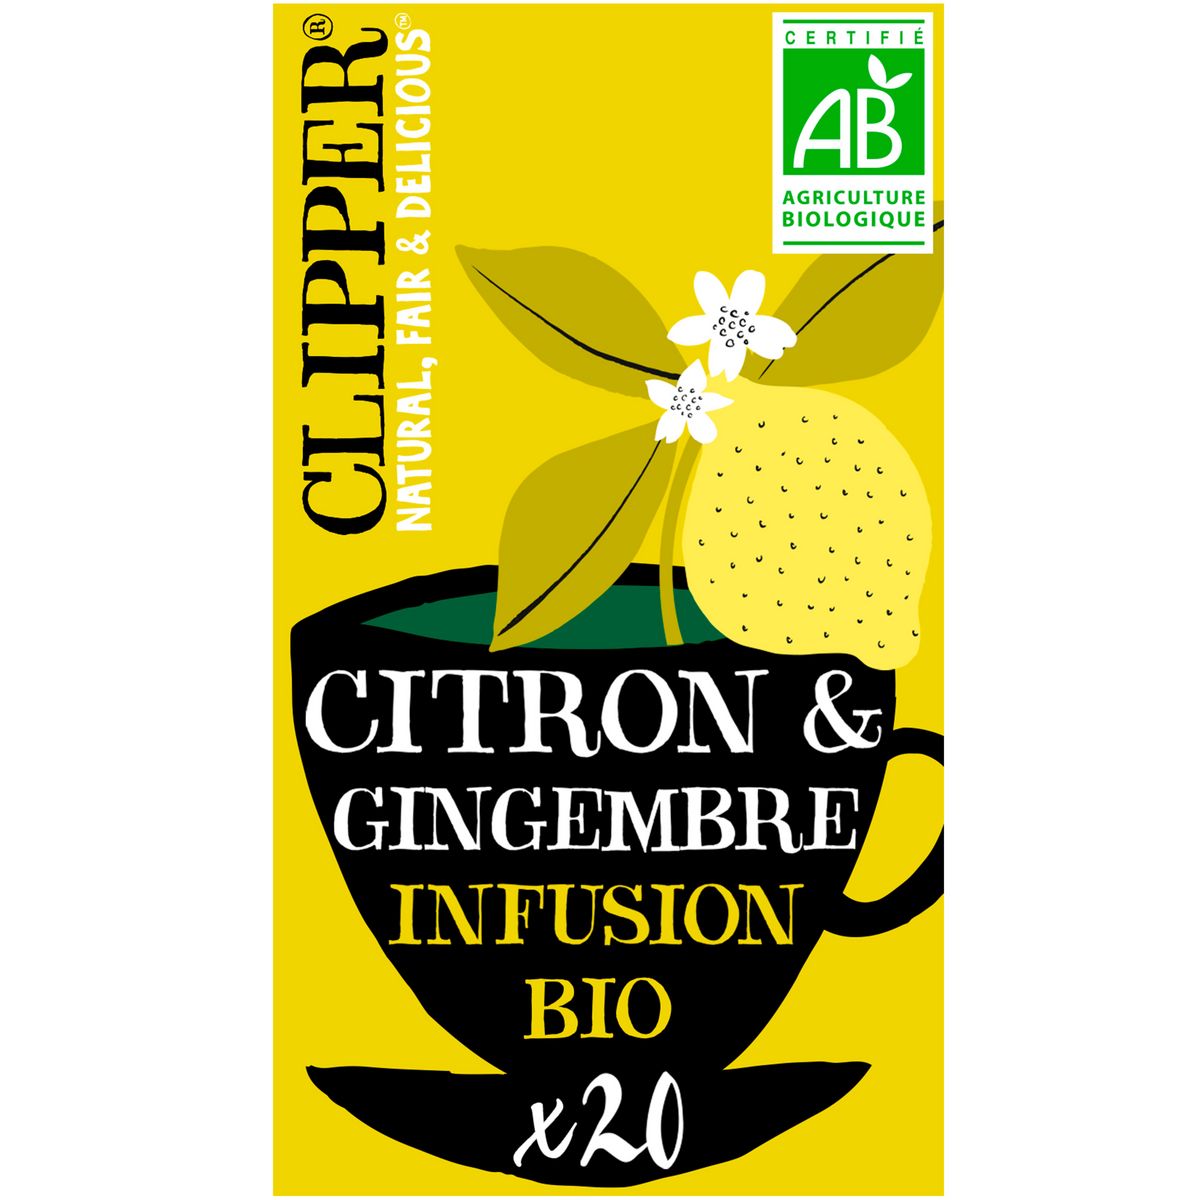 Achat / Vente Promotion Clipper Infusion Citron & Gingembre Bio, 50g